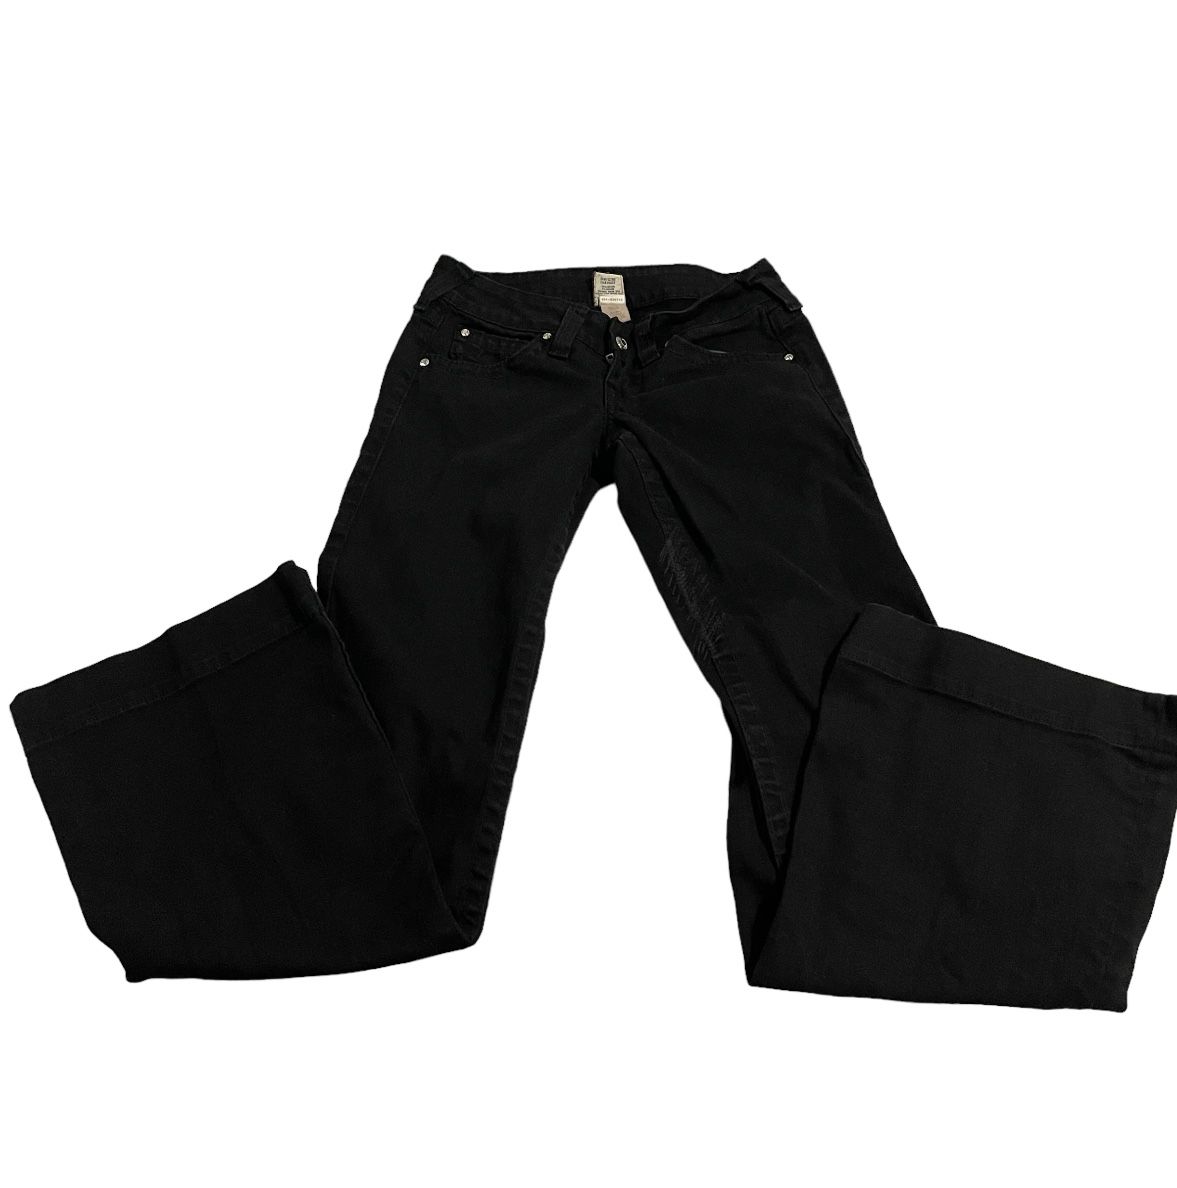 True Religion Jeans Women’s Size 27 Bootcut Disco Candice Rare Black World Tour